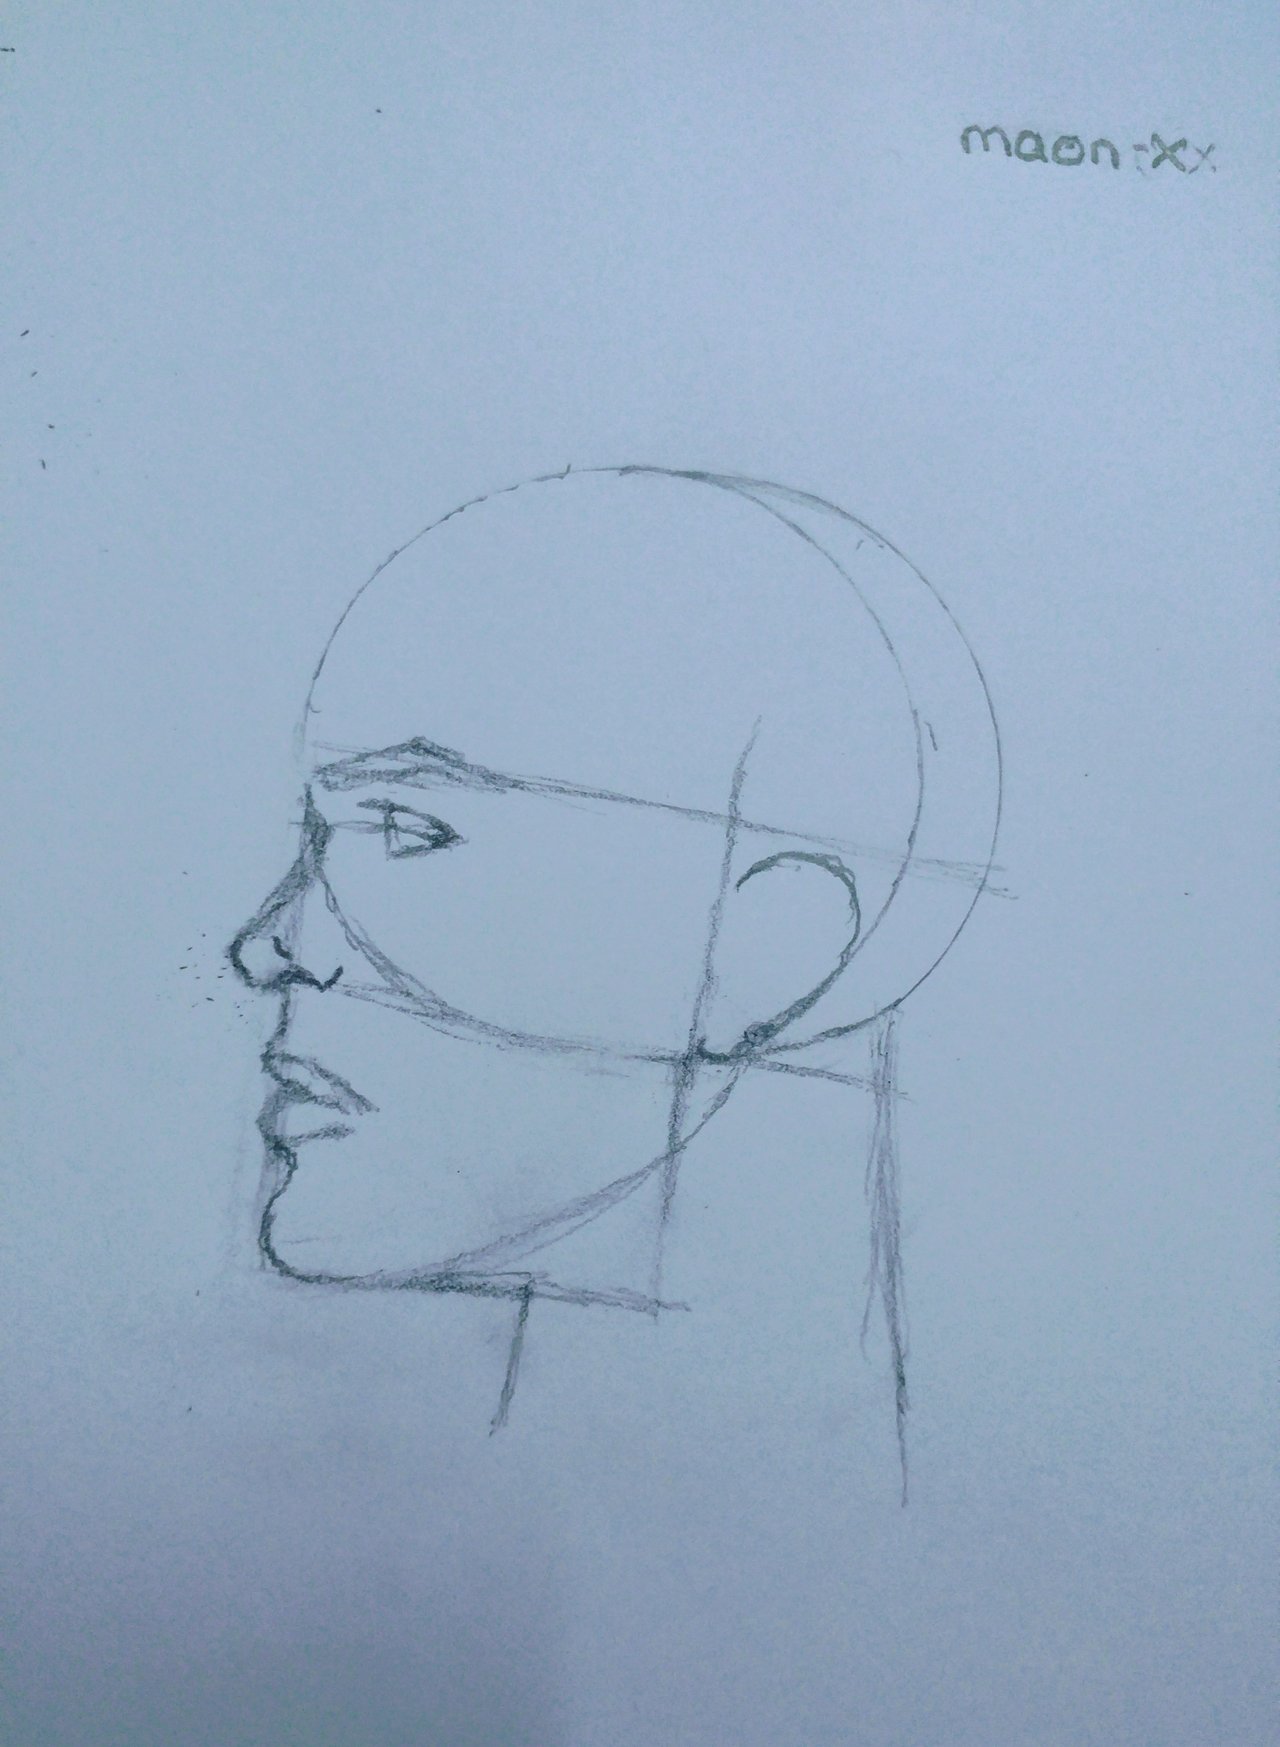 Yan Profilden Yuz Cizimi Face Drawing From Side Profile